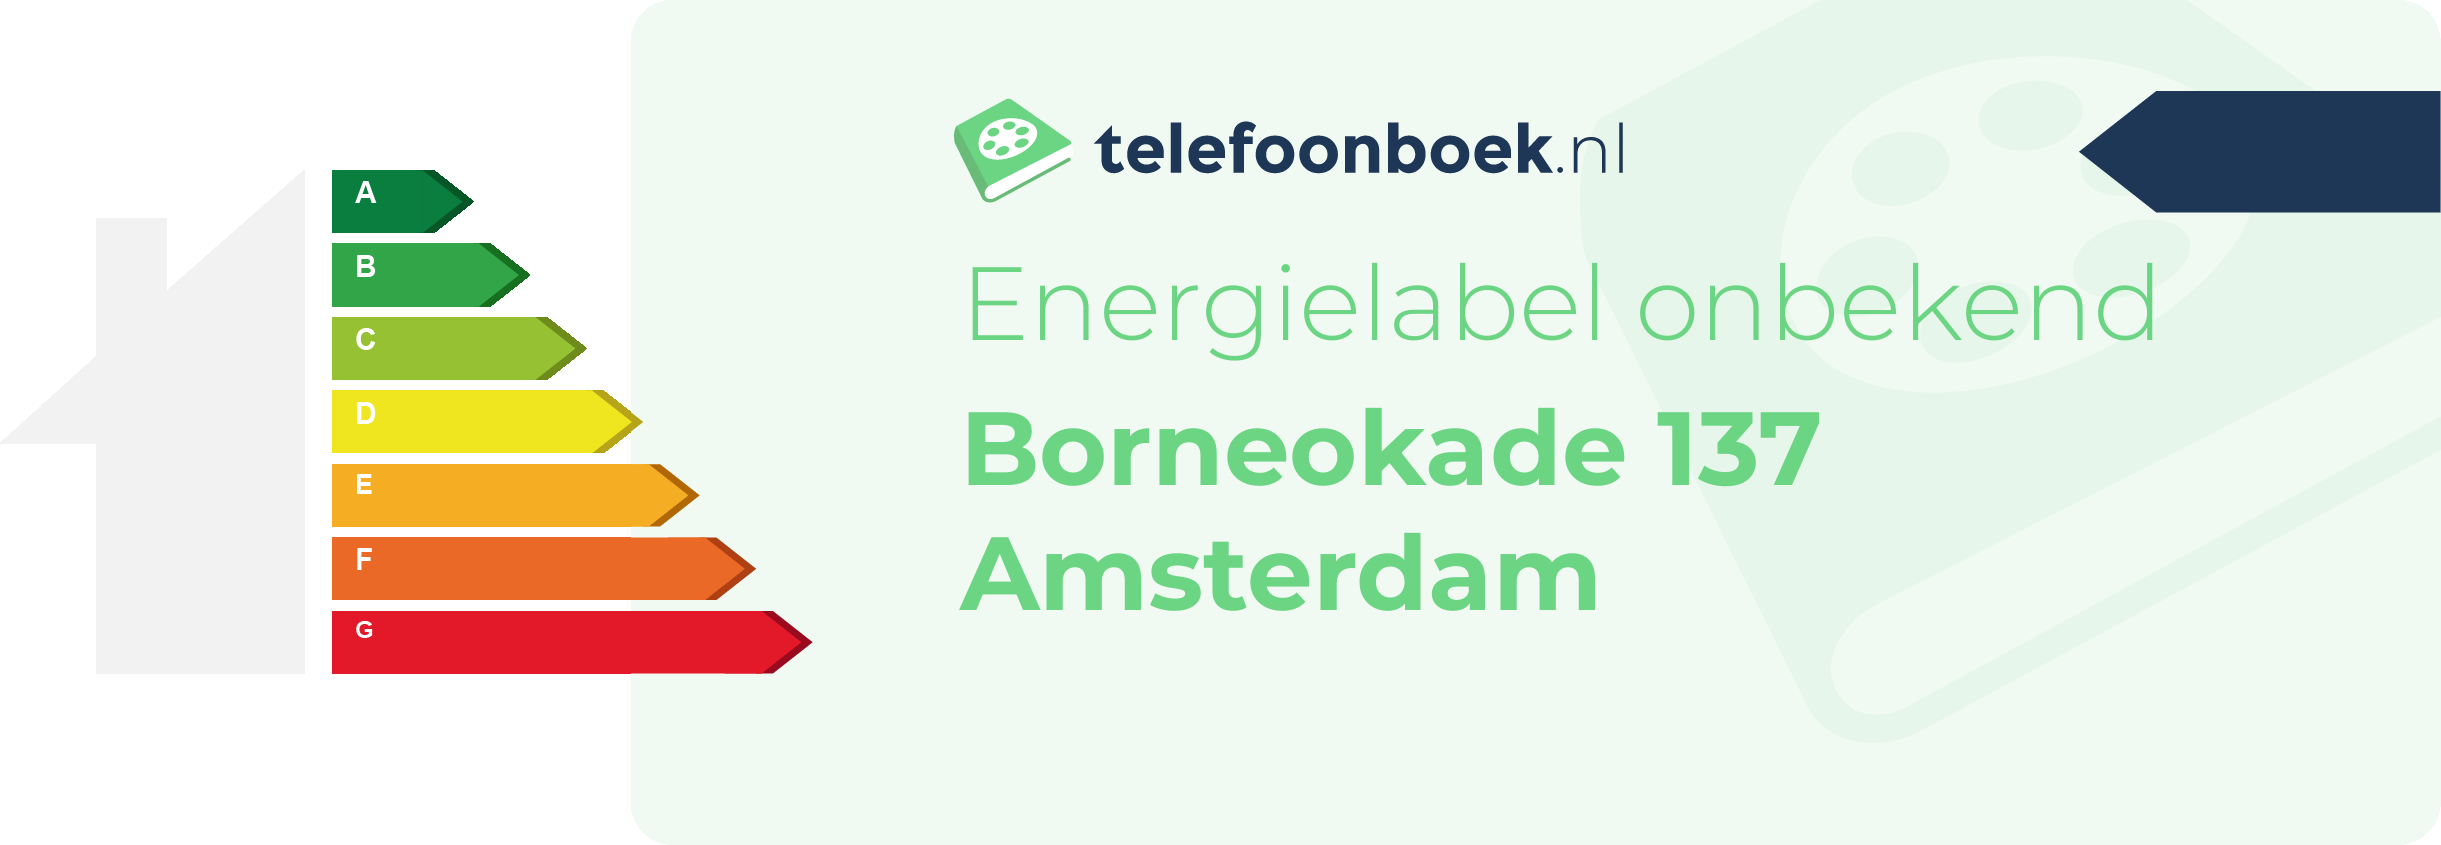 Energielabel Borneokade 137 Amsterdam